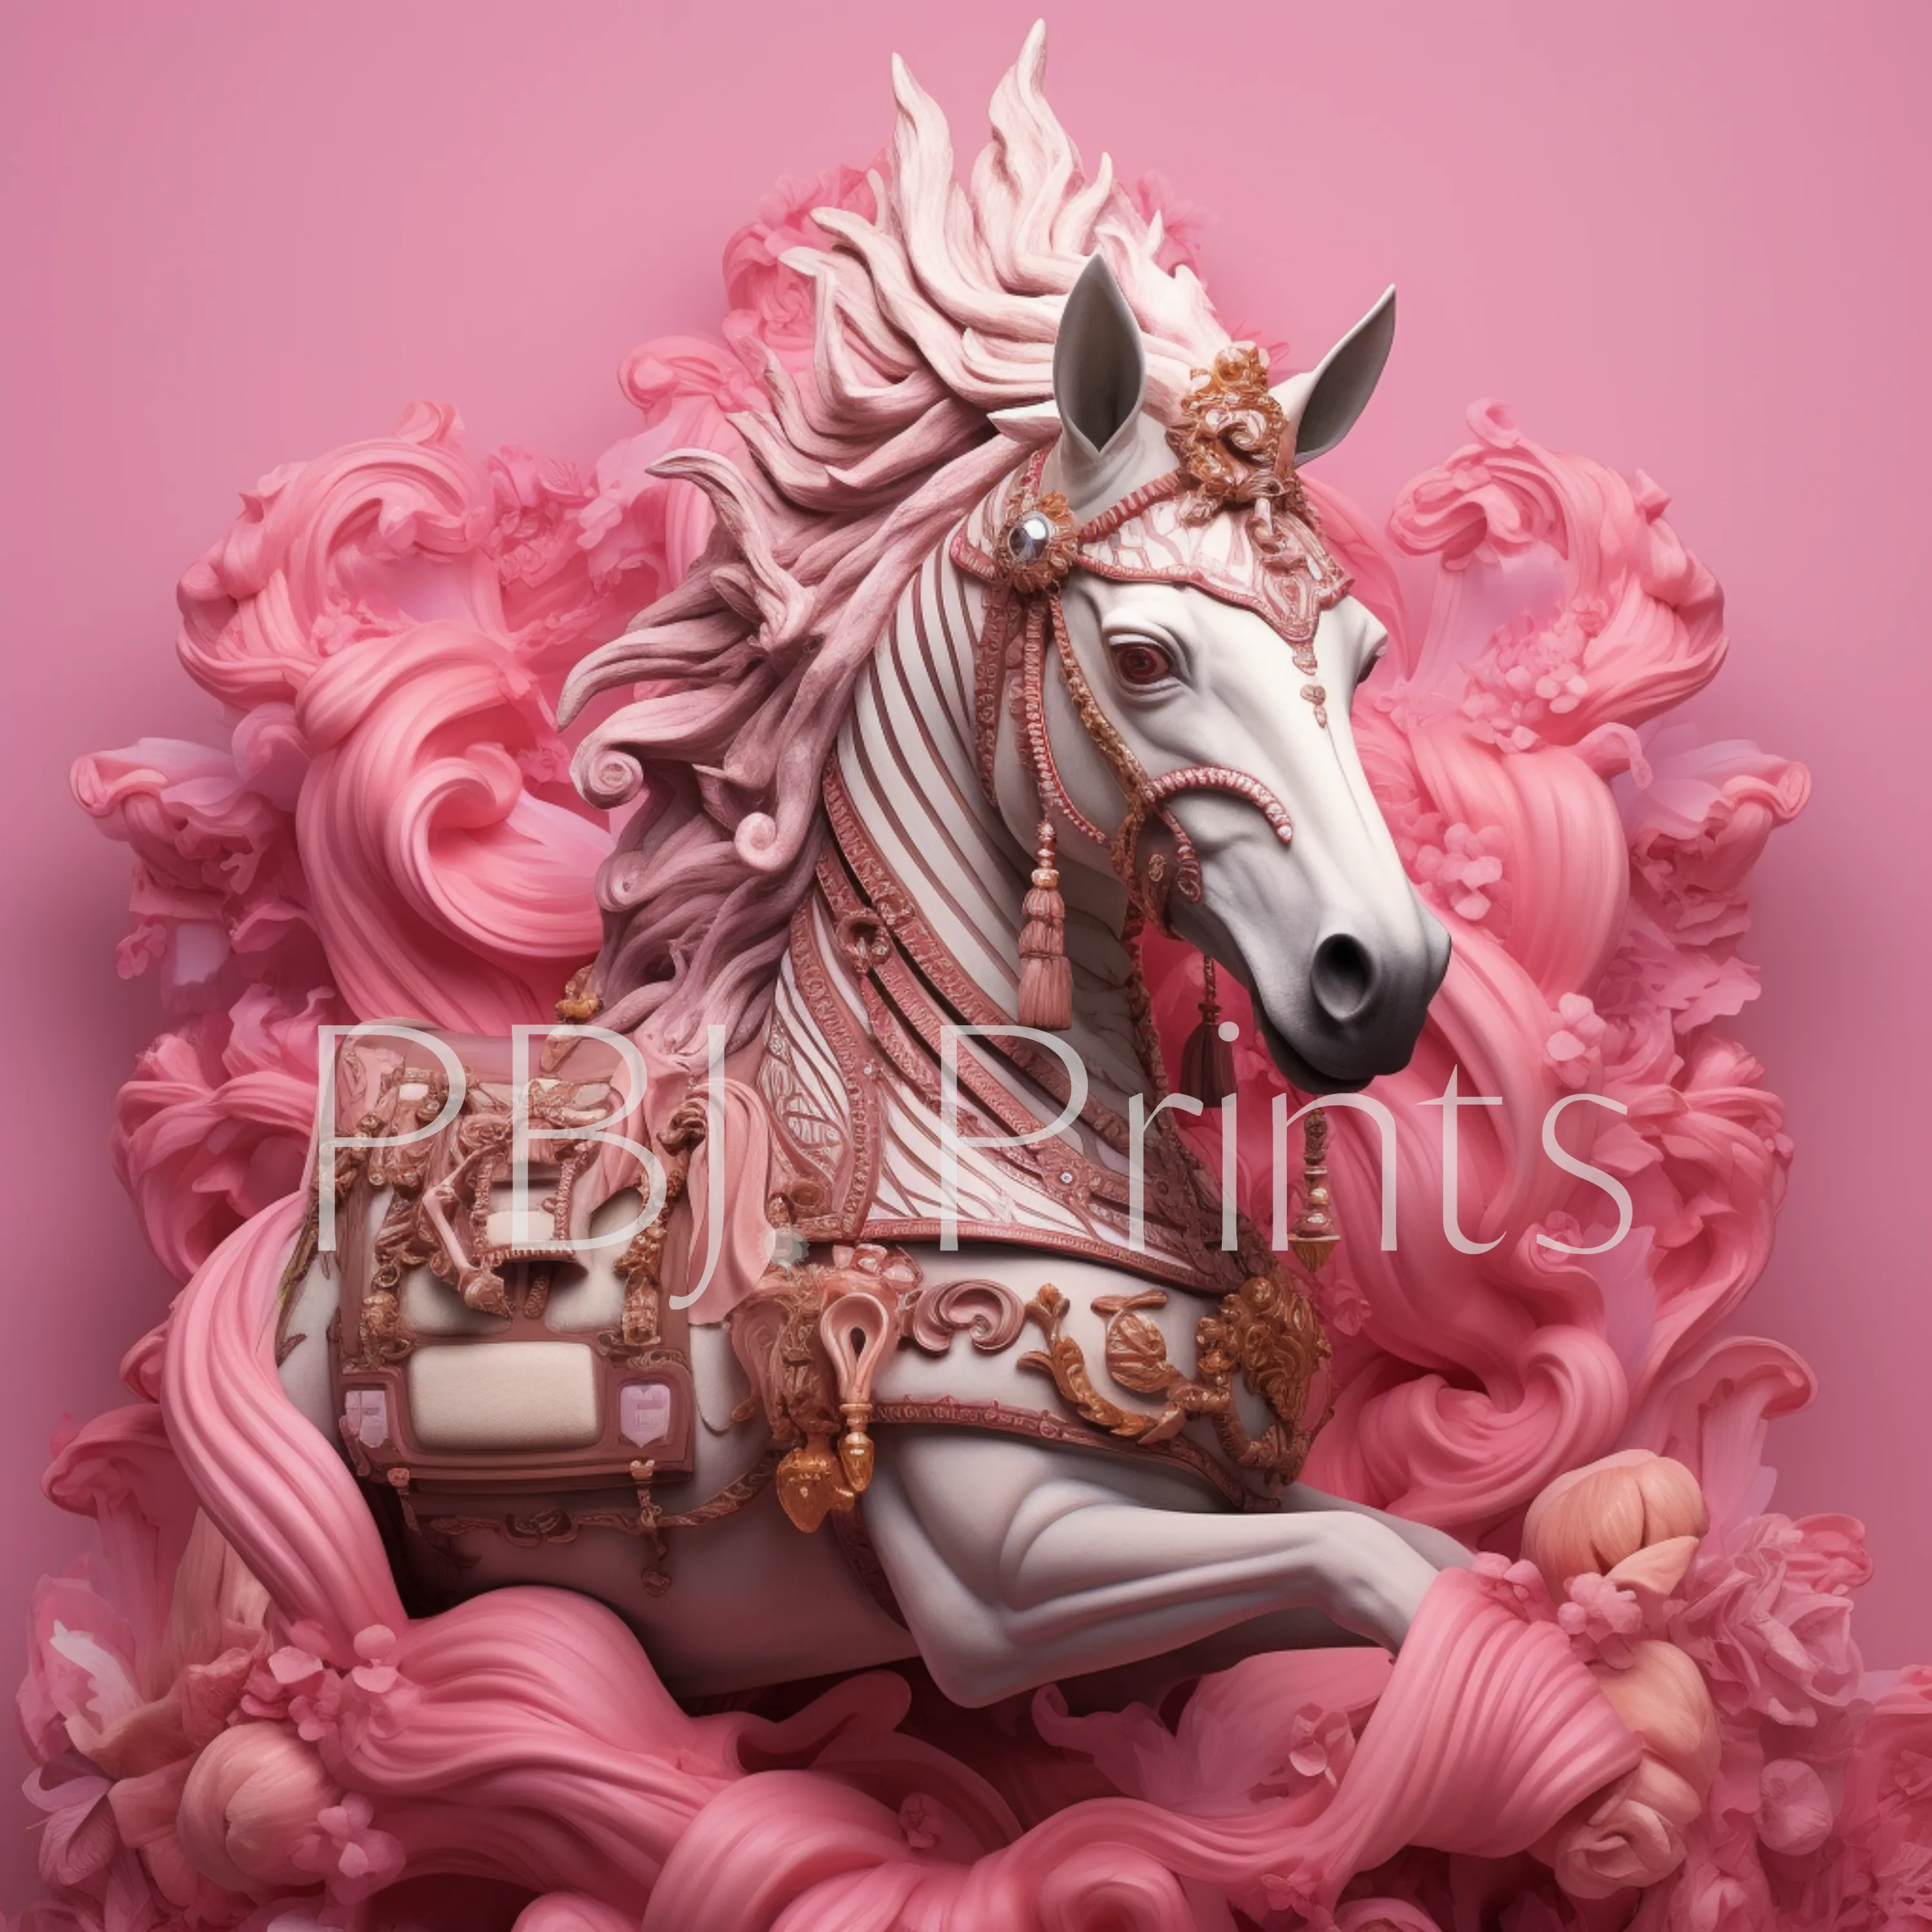 Pink Horse - Artist by Audrey Hughes - Art Prints, Decoupage Rice Paper, Flat Canvas Prints, Giclee Prints, Photo Prints, Poster Prints